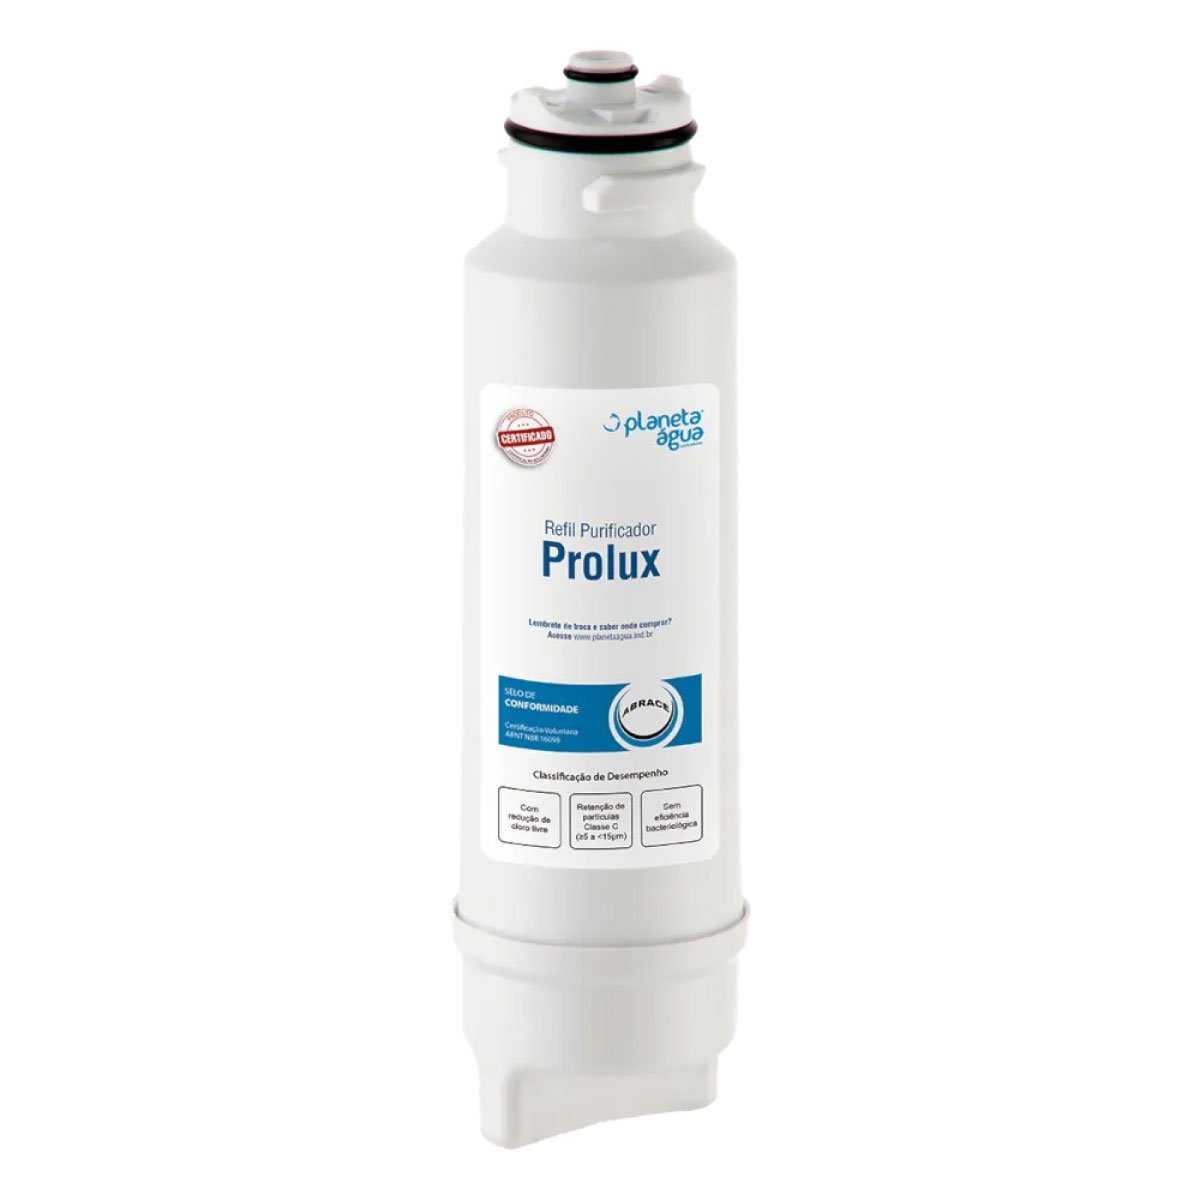 Refil Filtro Prolux para Purificador Eletrolux Planeta Água - 1